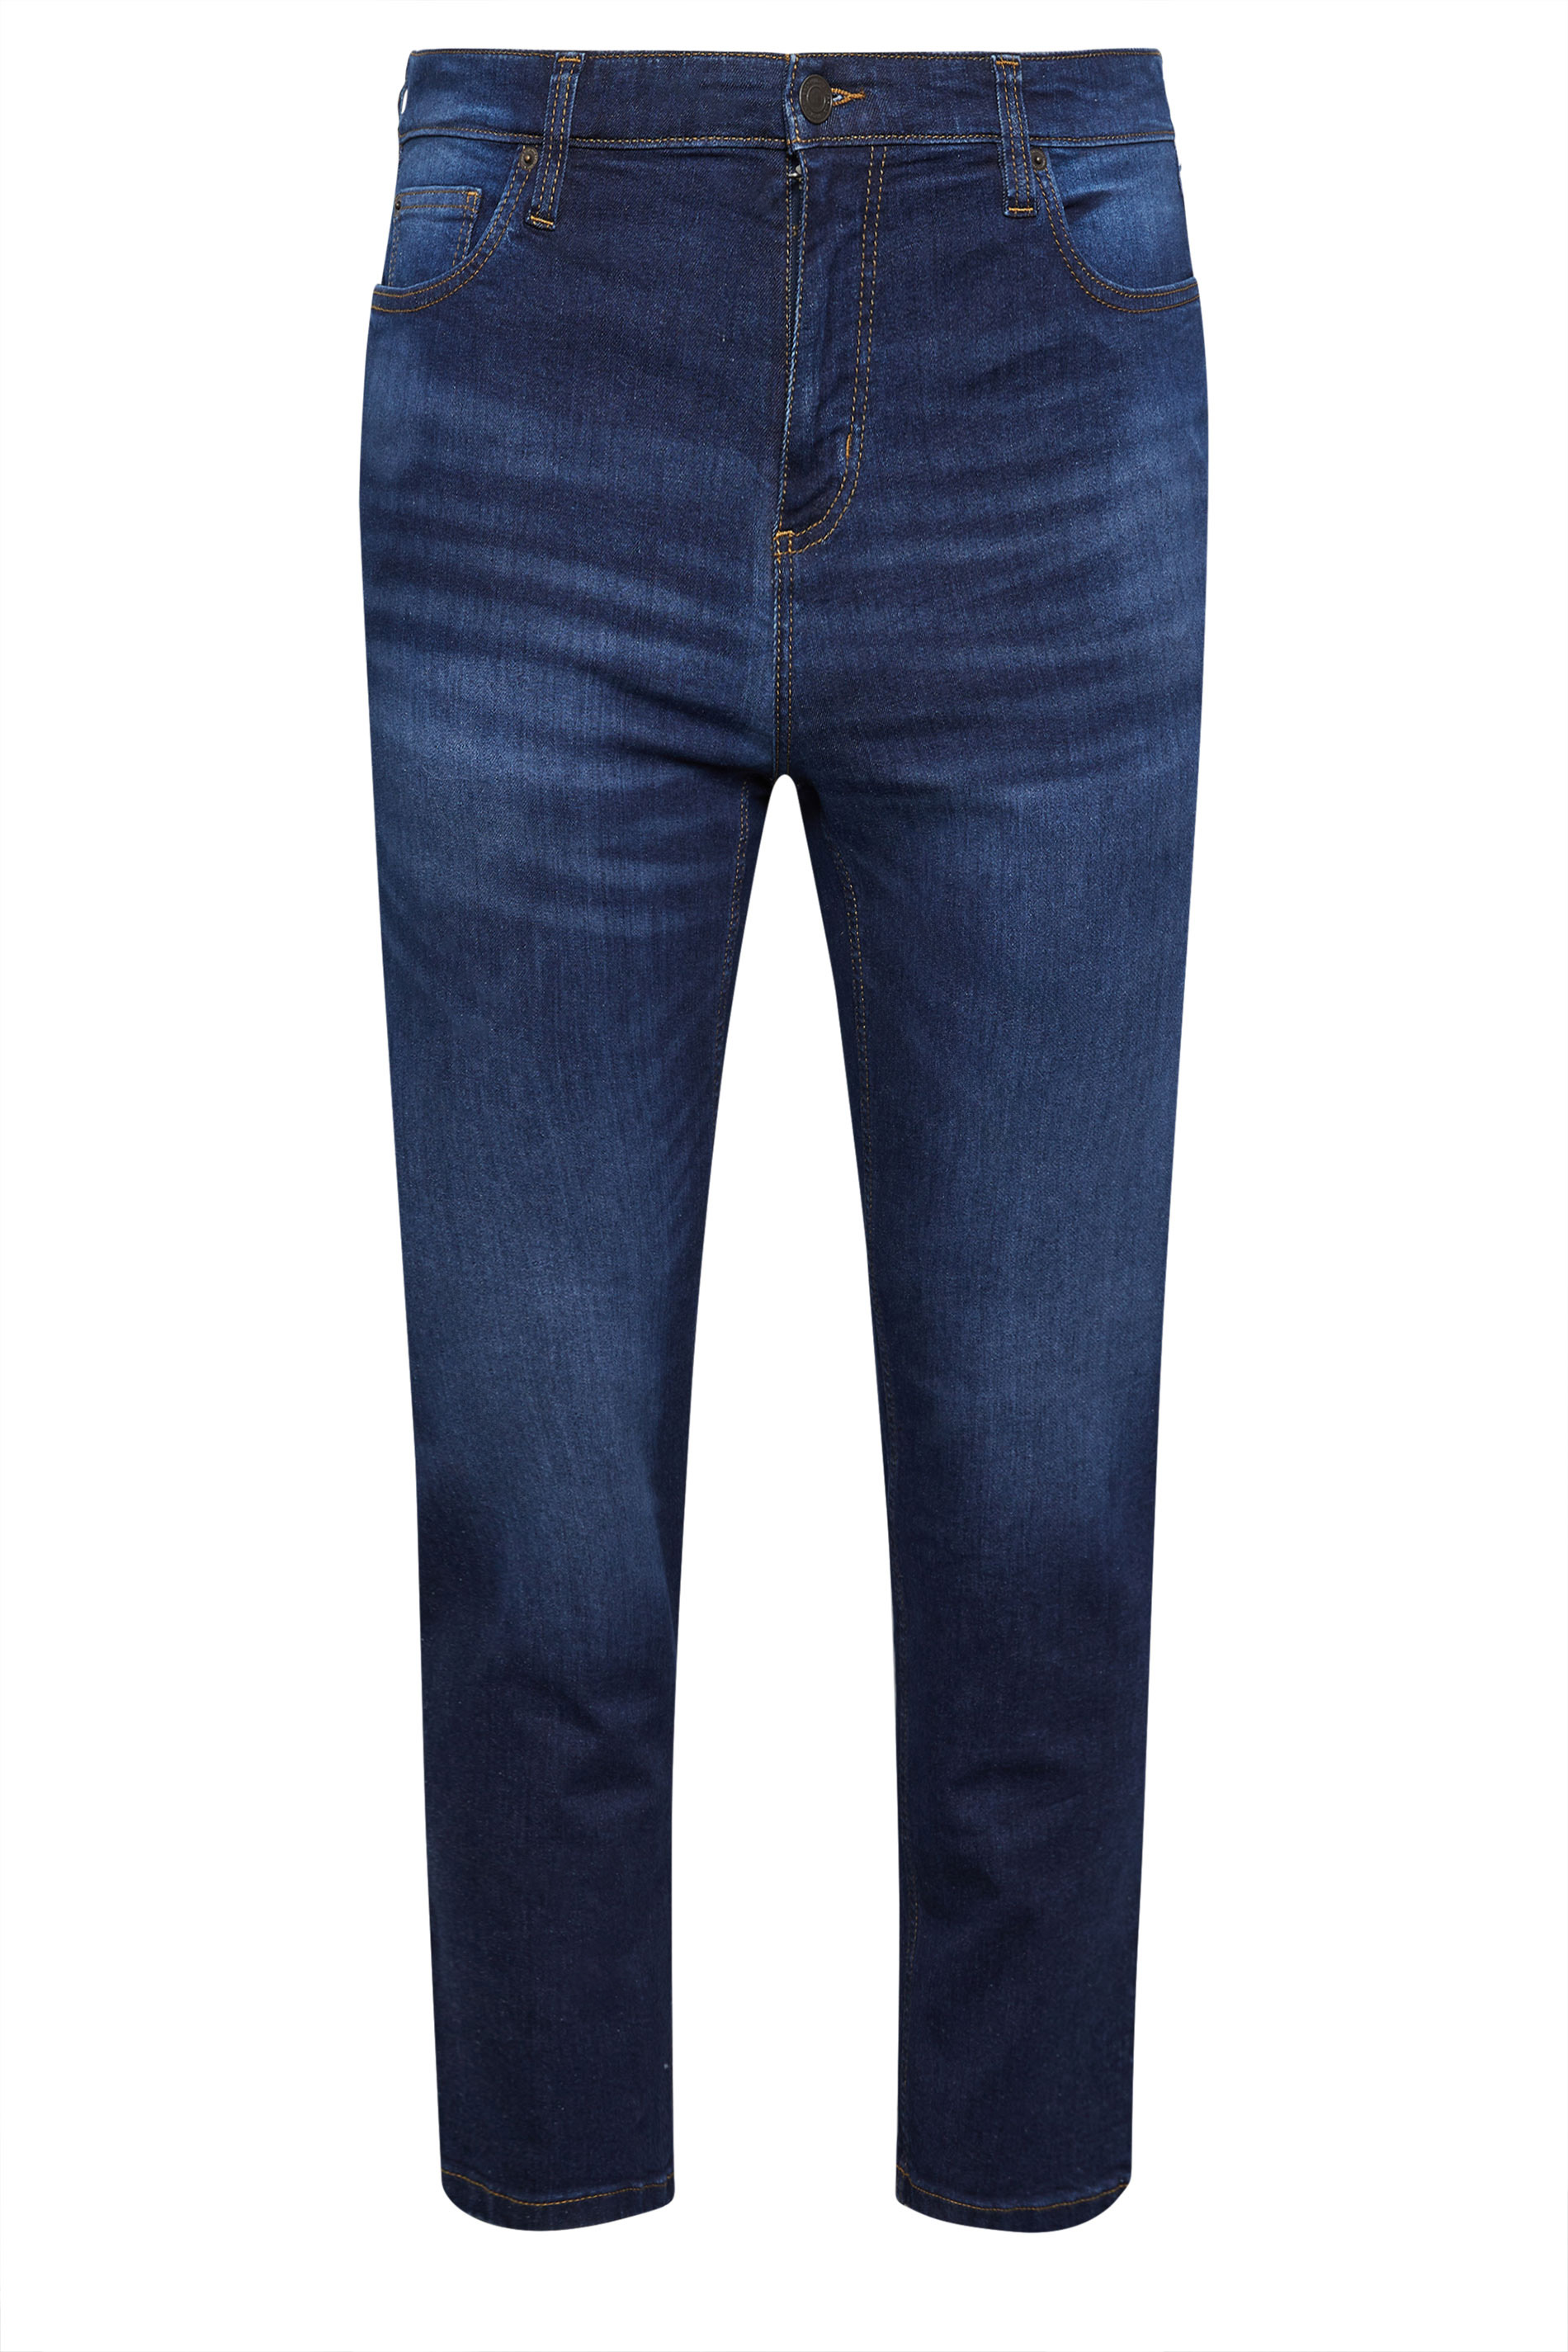 BadRhino Big & Tall Dark Wash Denim Jeans | BadRhino 3